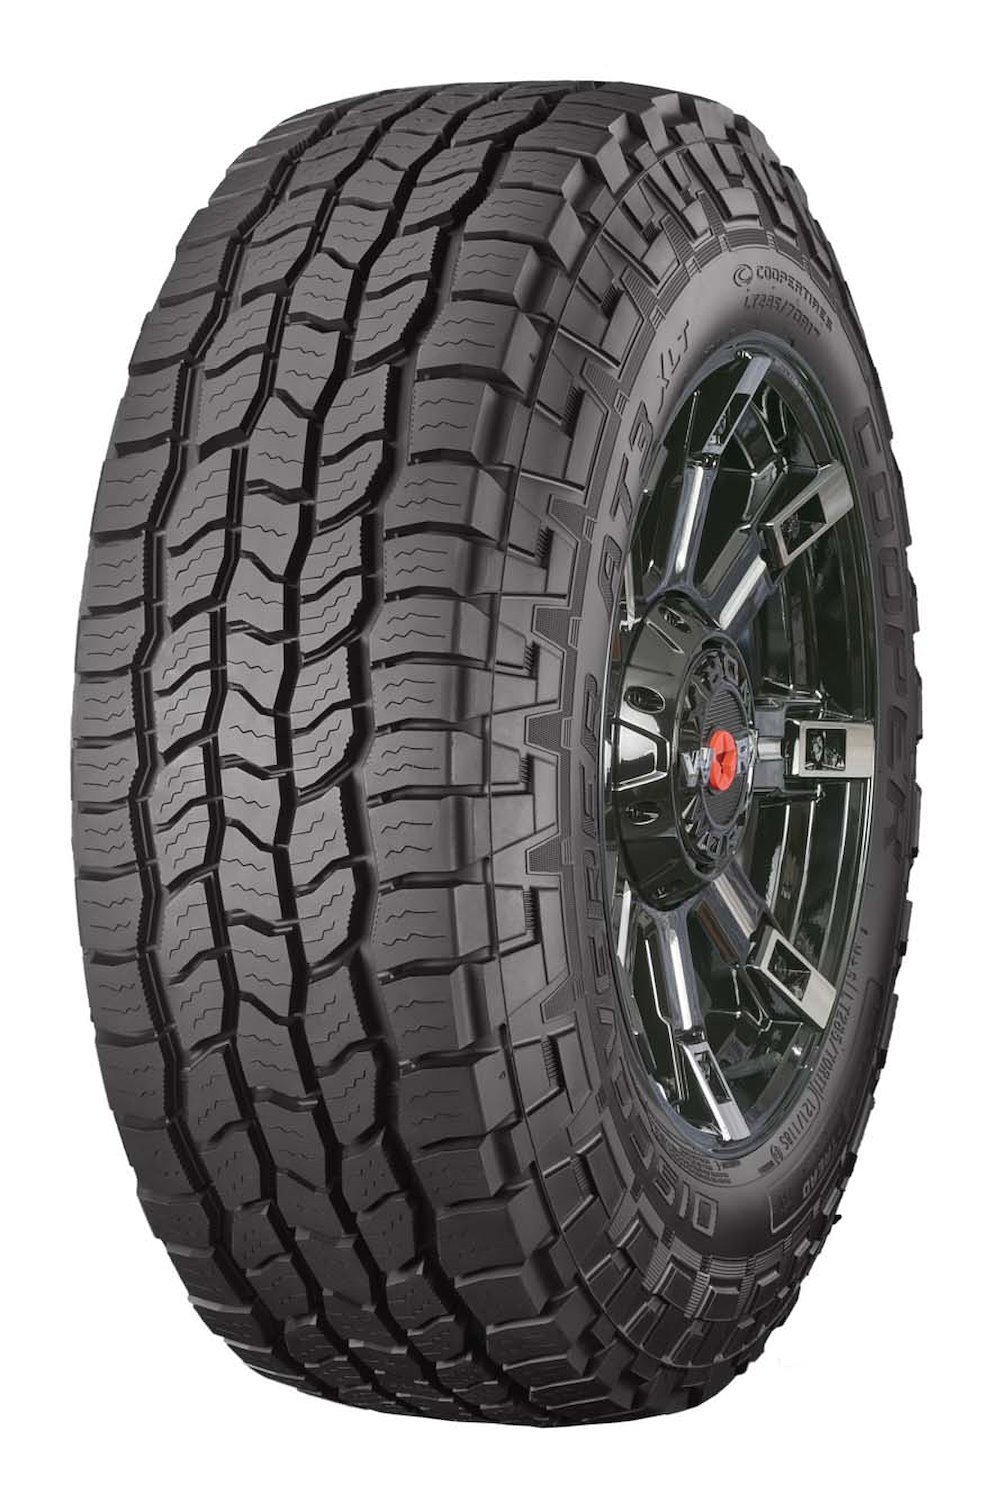 Discoverer AT3 XLT All-Terrain Tire, 33X12.50R15LT